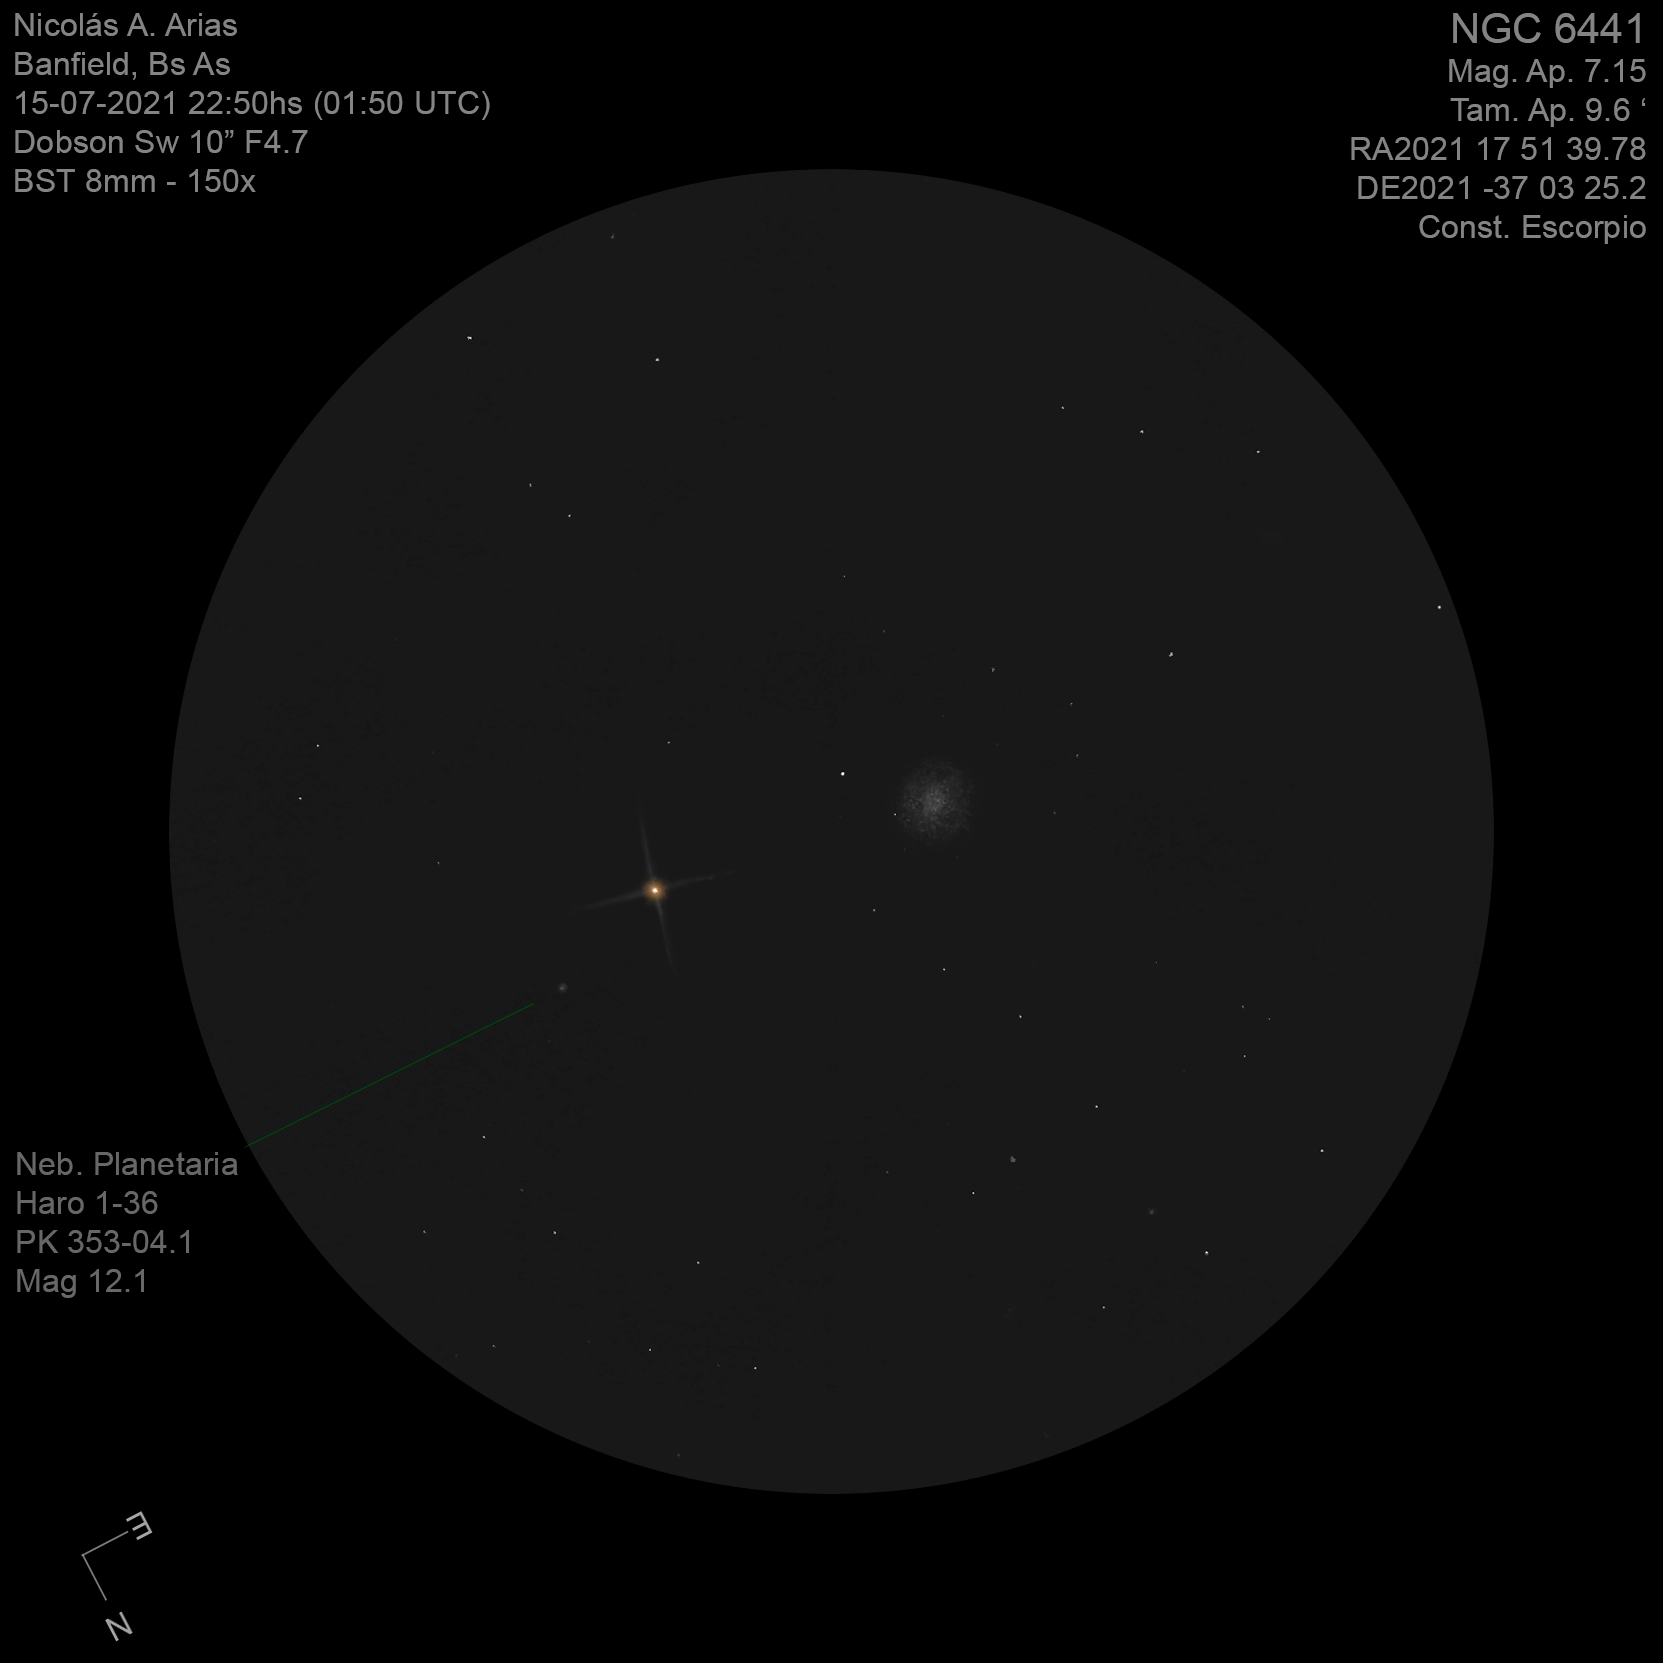 1688793955_NGC644115-7-2021150x.png.f56f23c588b490fd28f1feacd04f1018.png